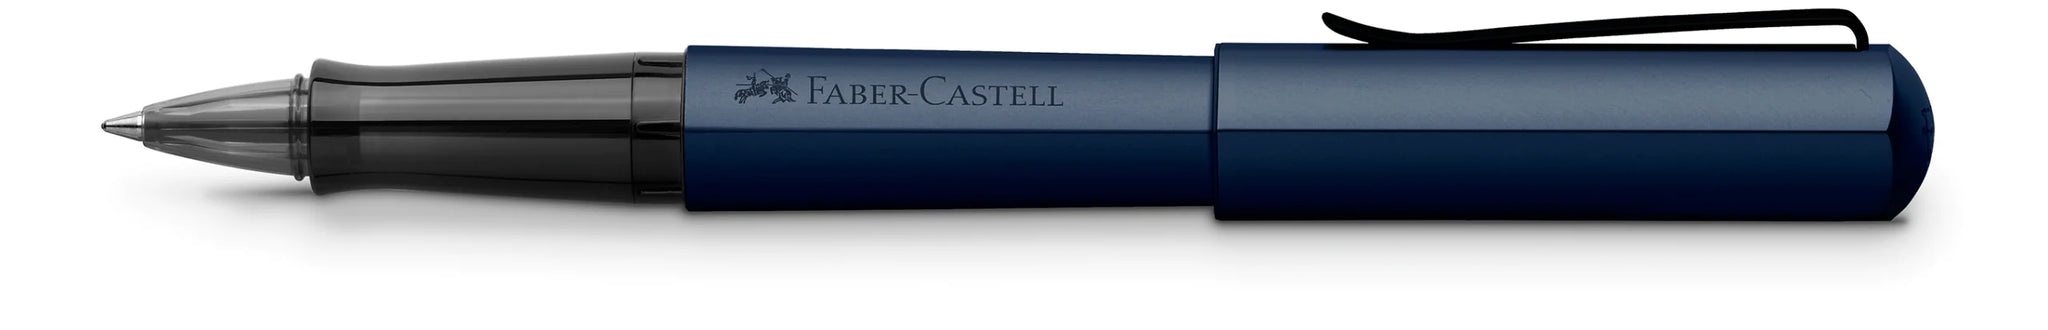 Faber-Castell Hexo Rollerball